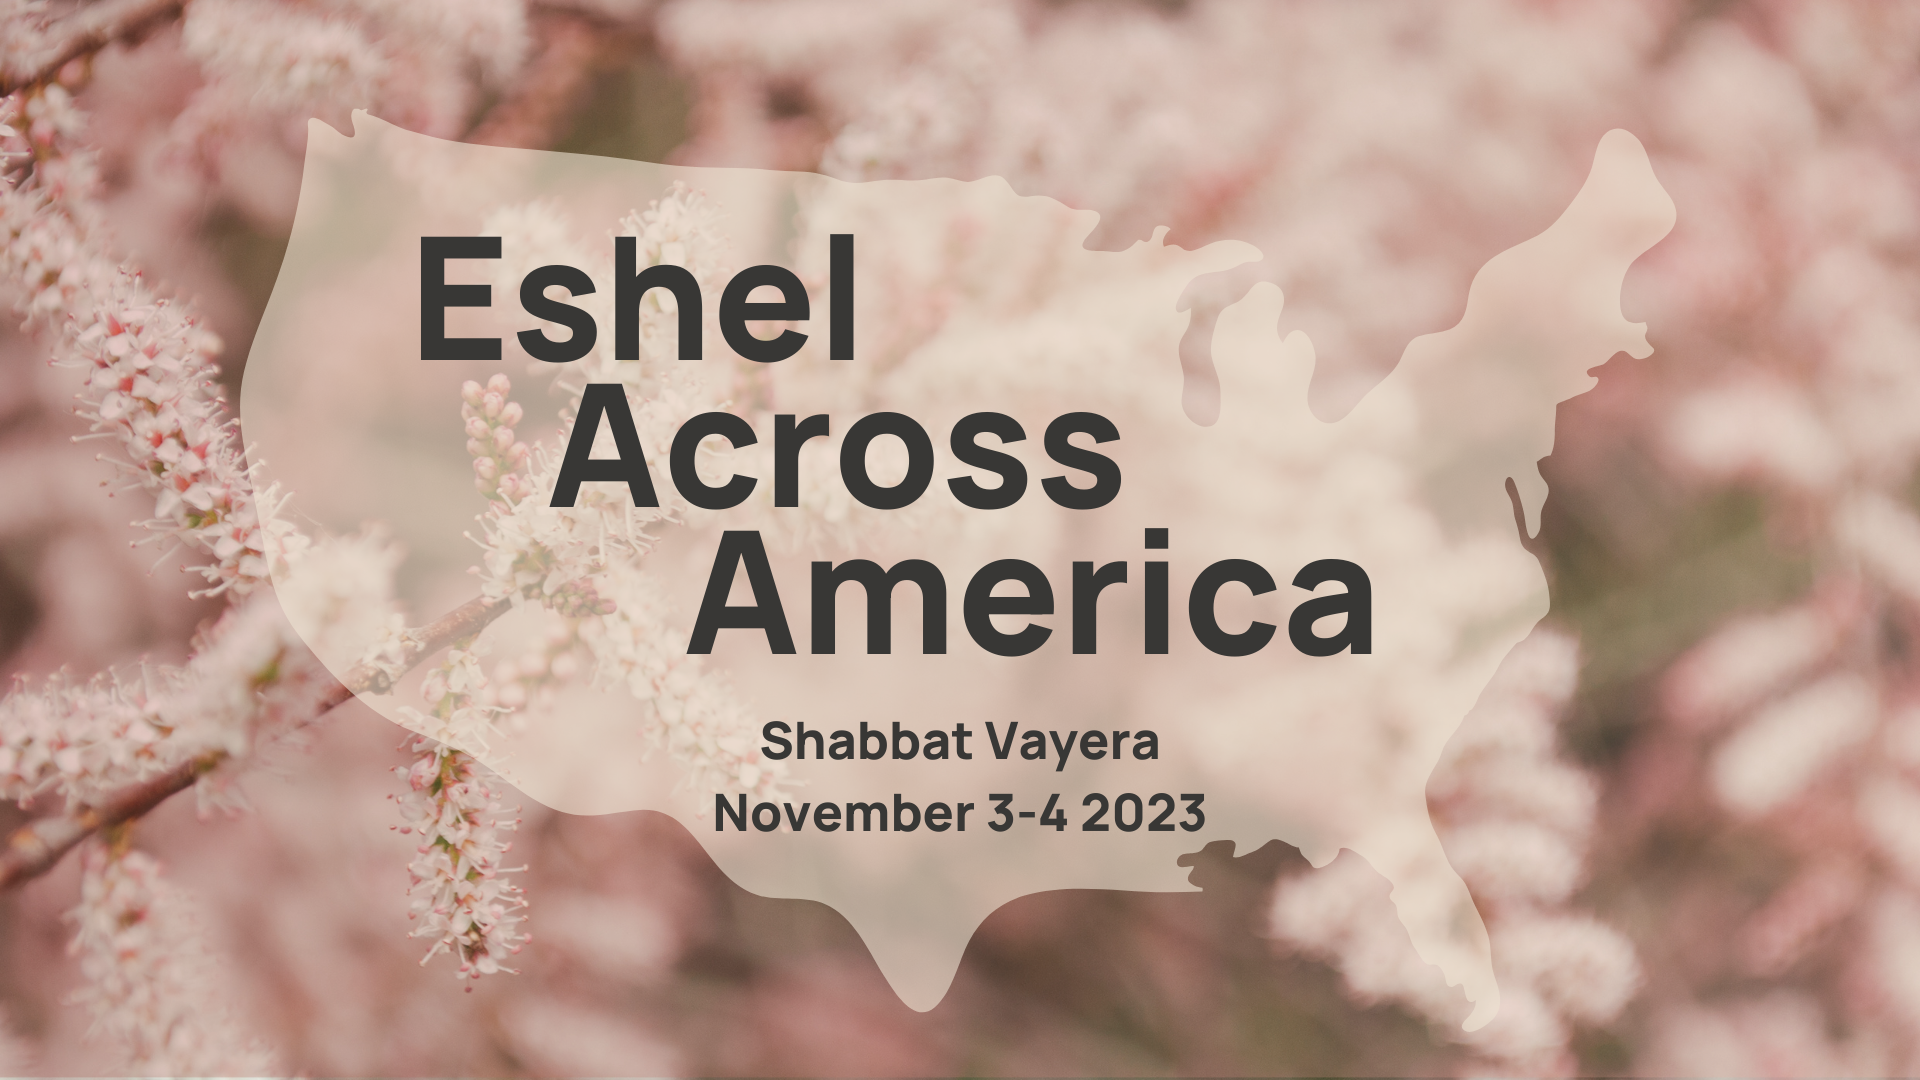 Eshel Across America - Shabbat Vayera November 3-4 2023